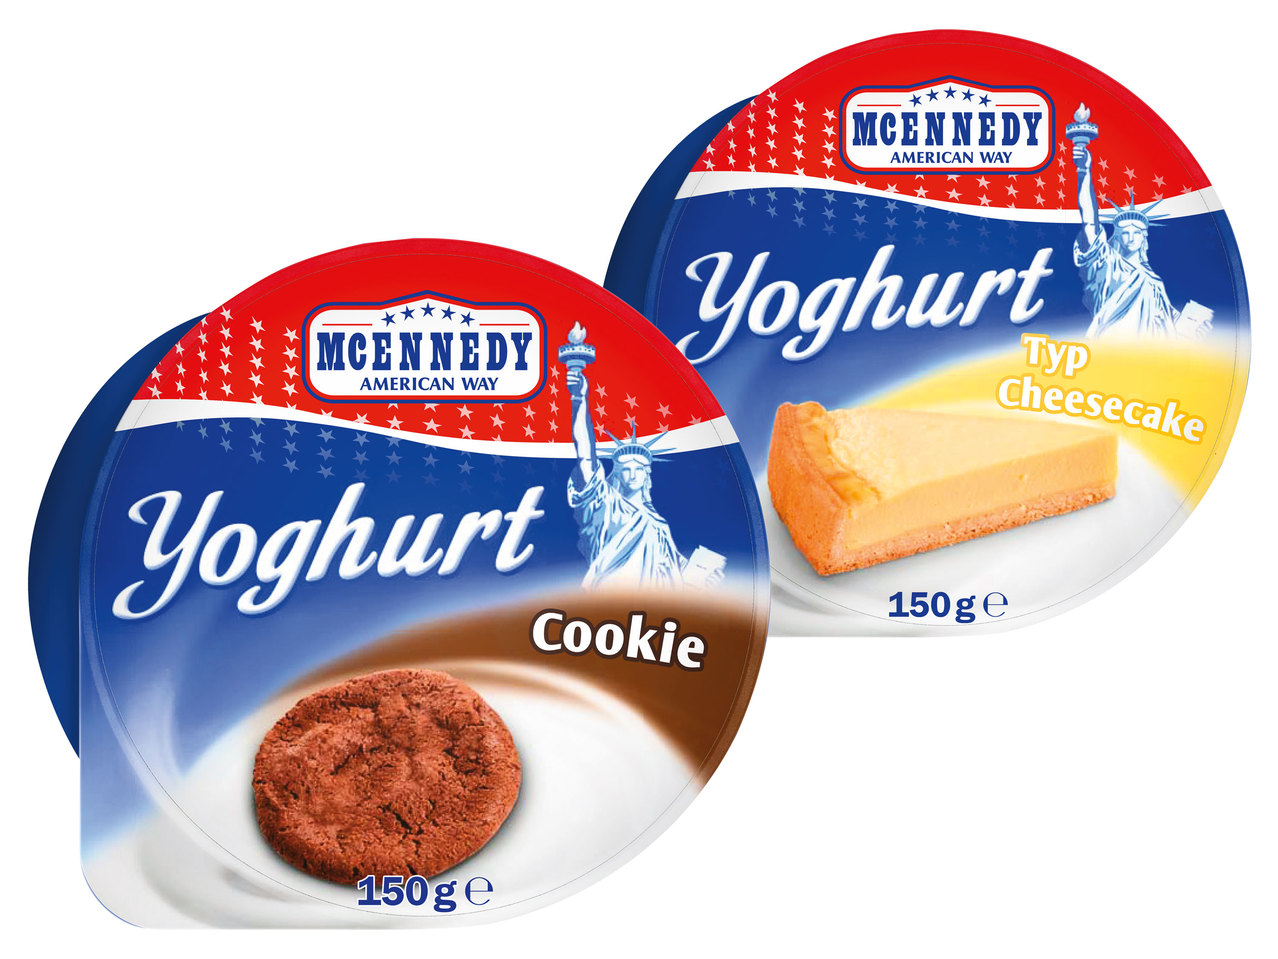 MCENNEDY American Joghurt